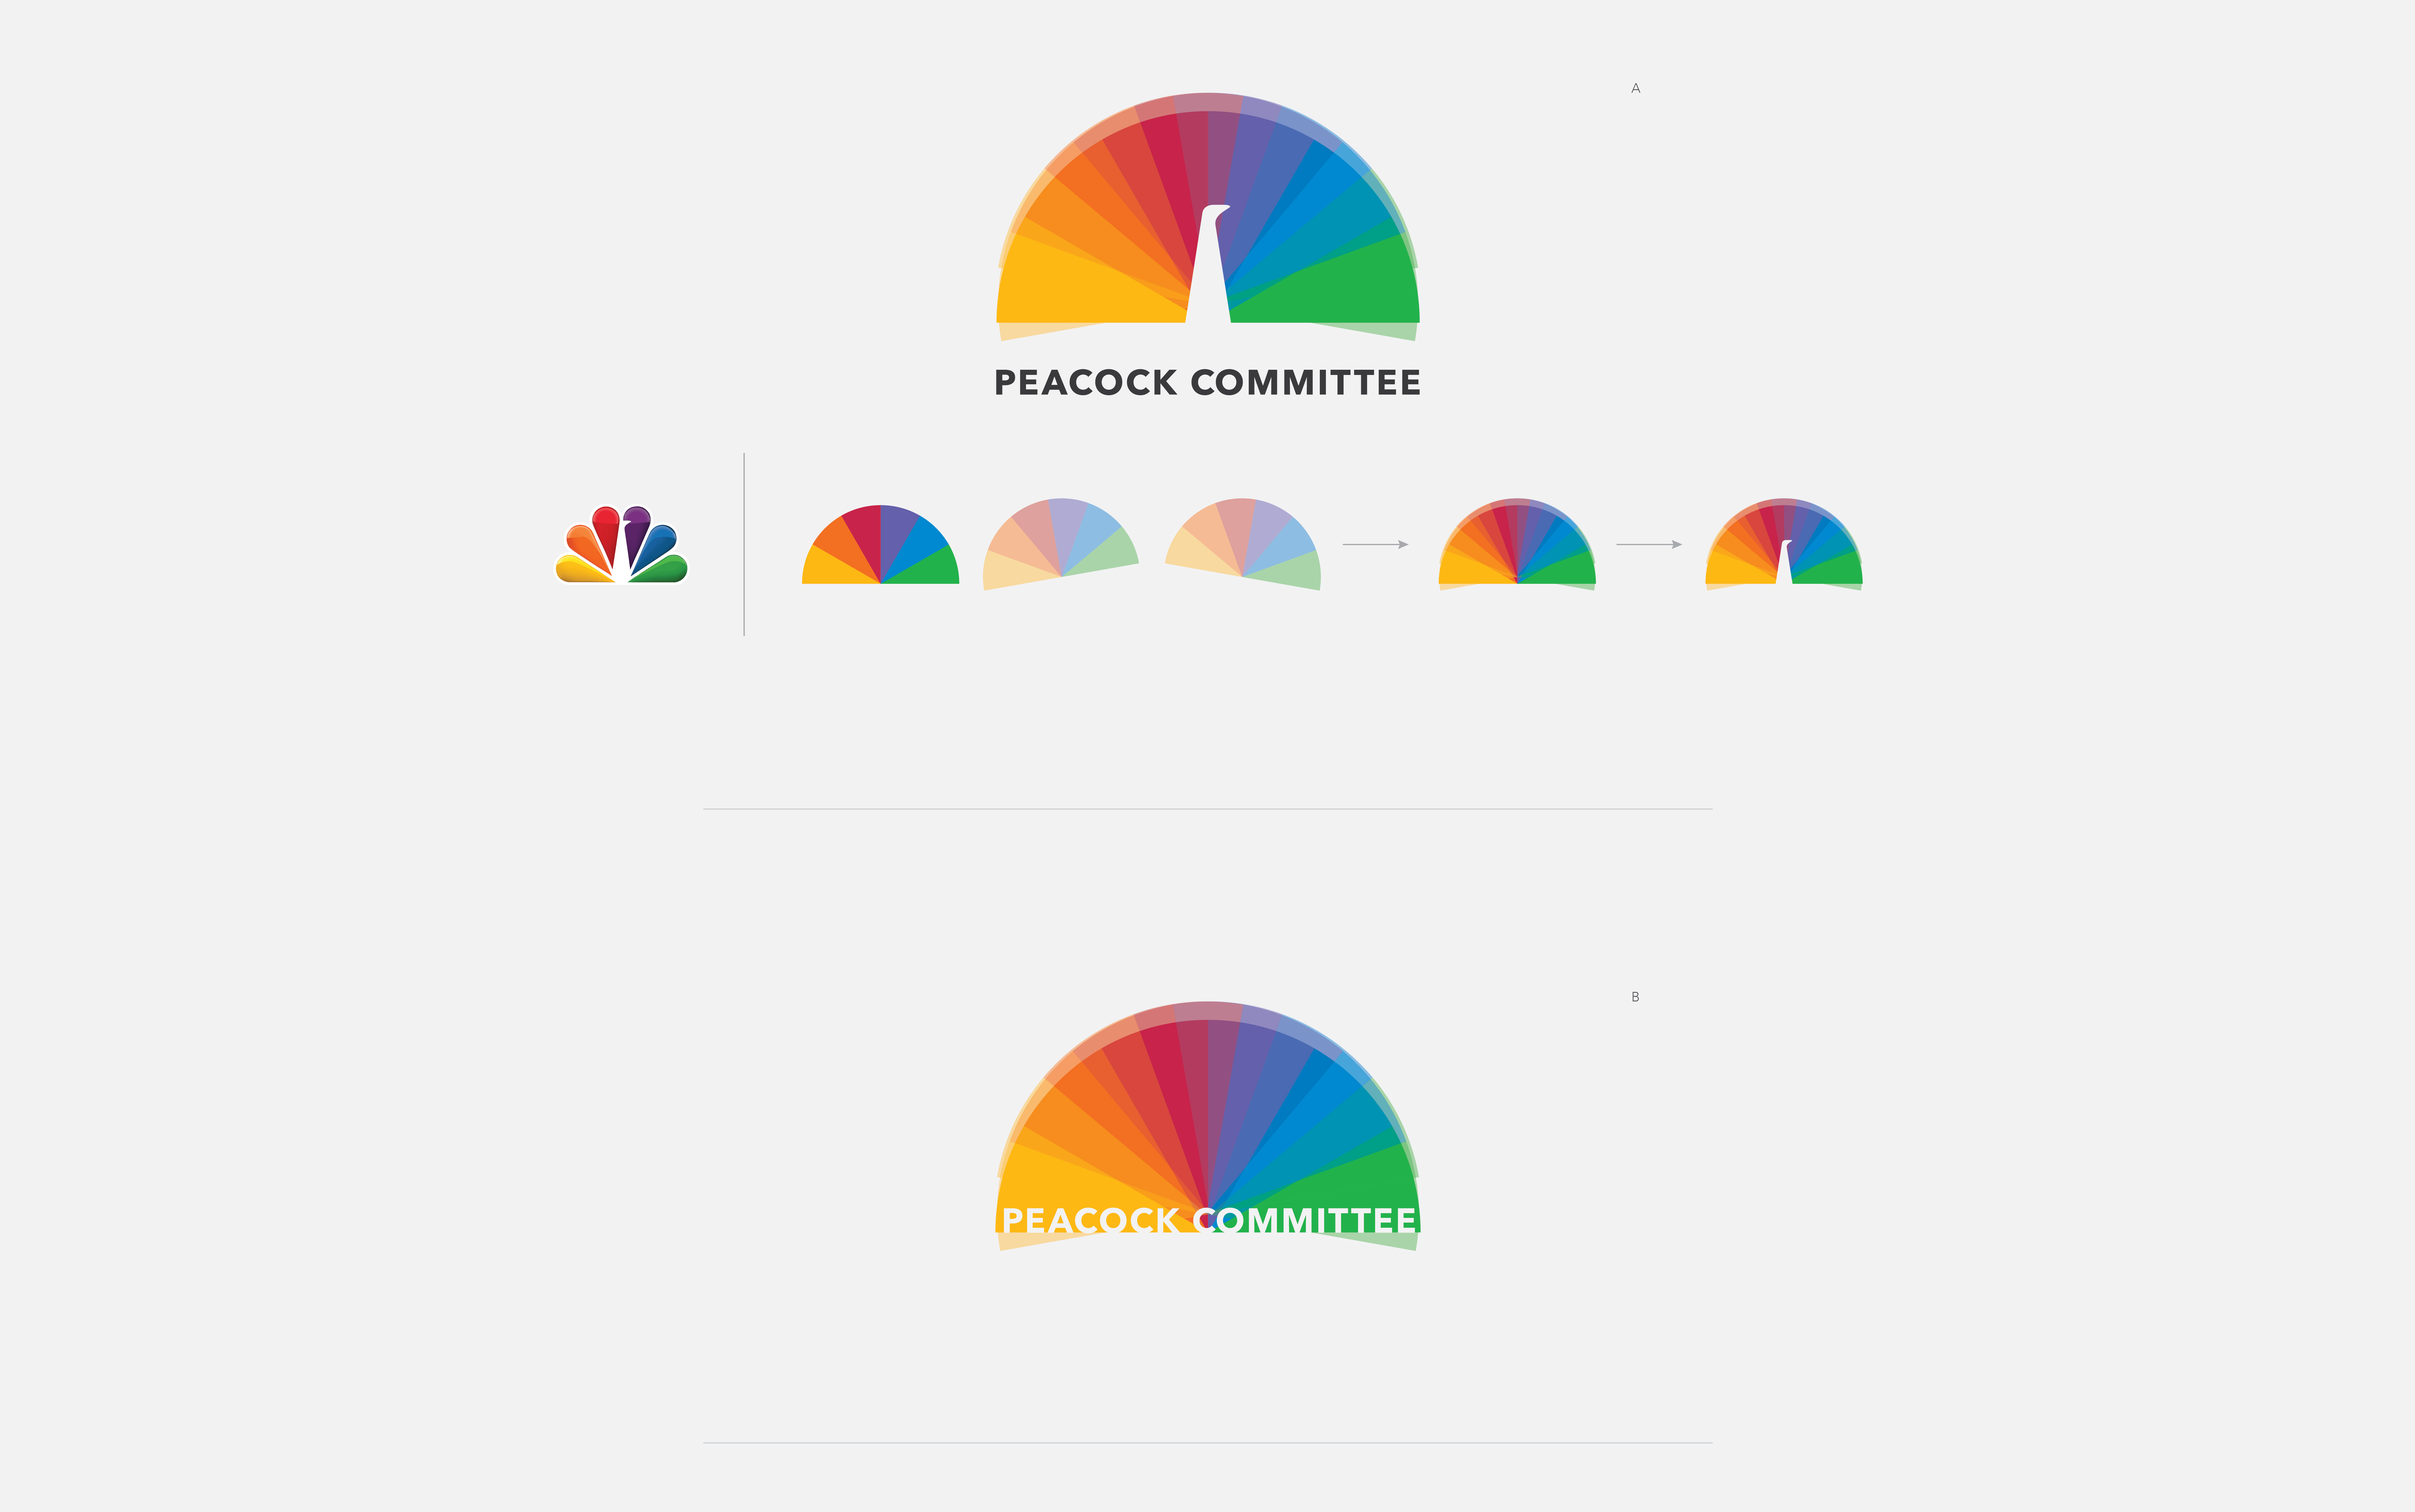 NBC Universal Logo - Shiro › NBCUniversal Peacock Committee Logo